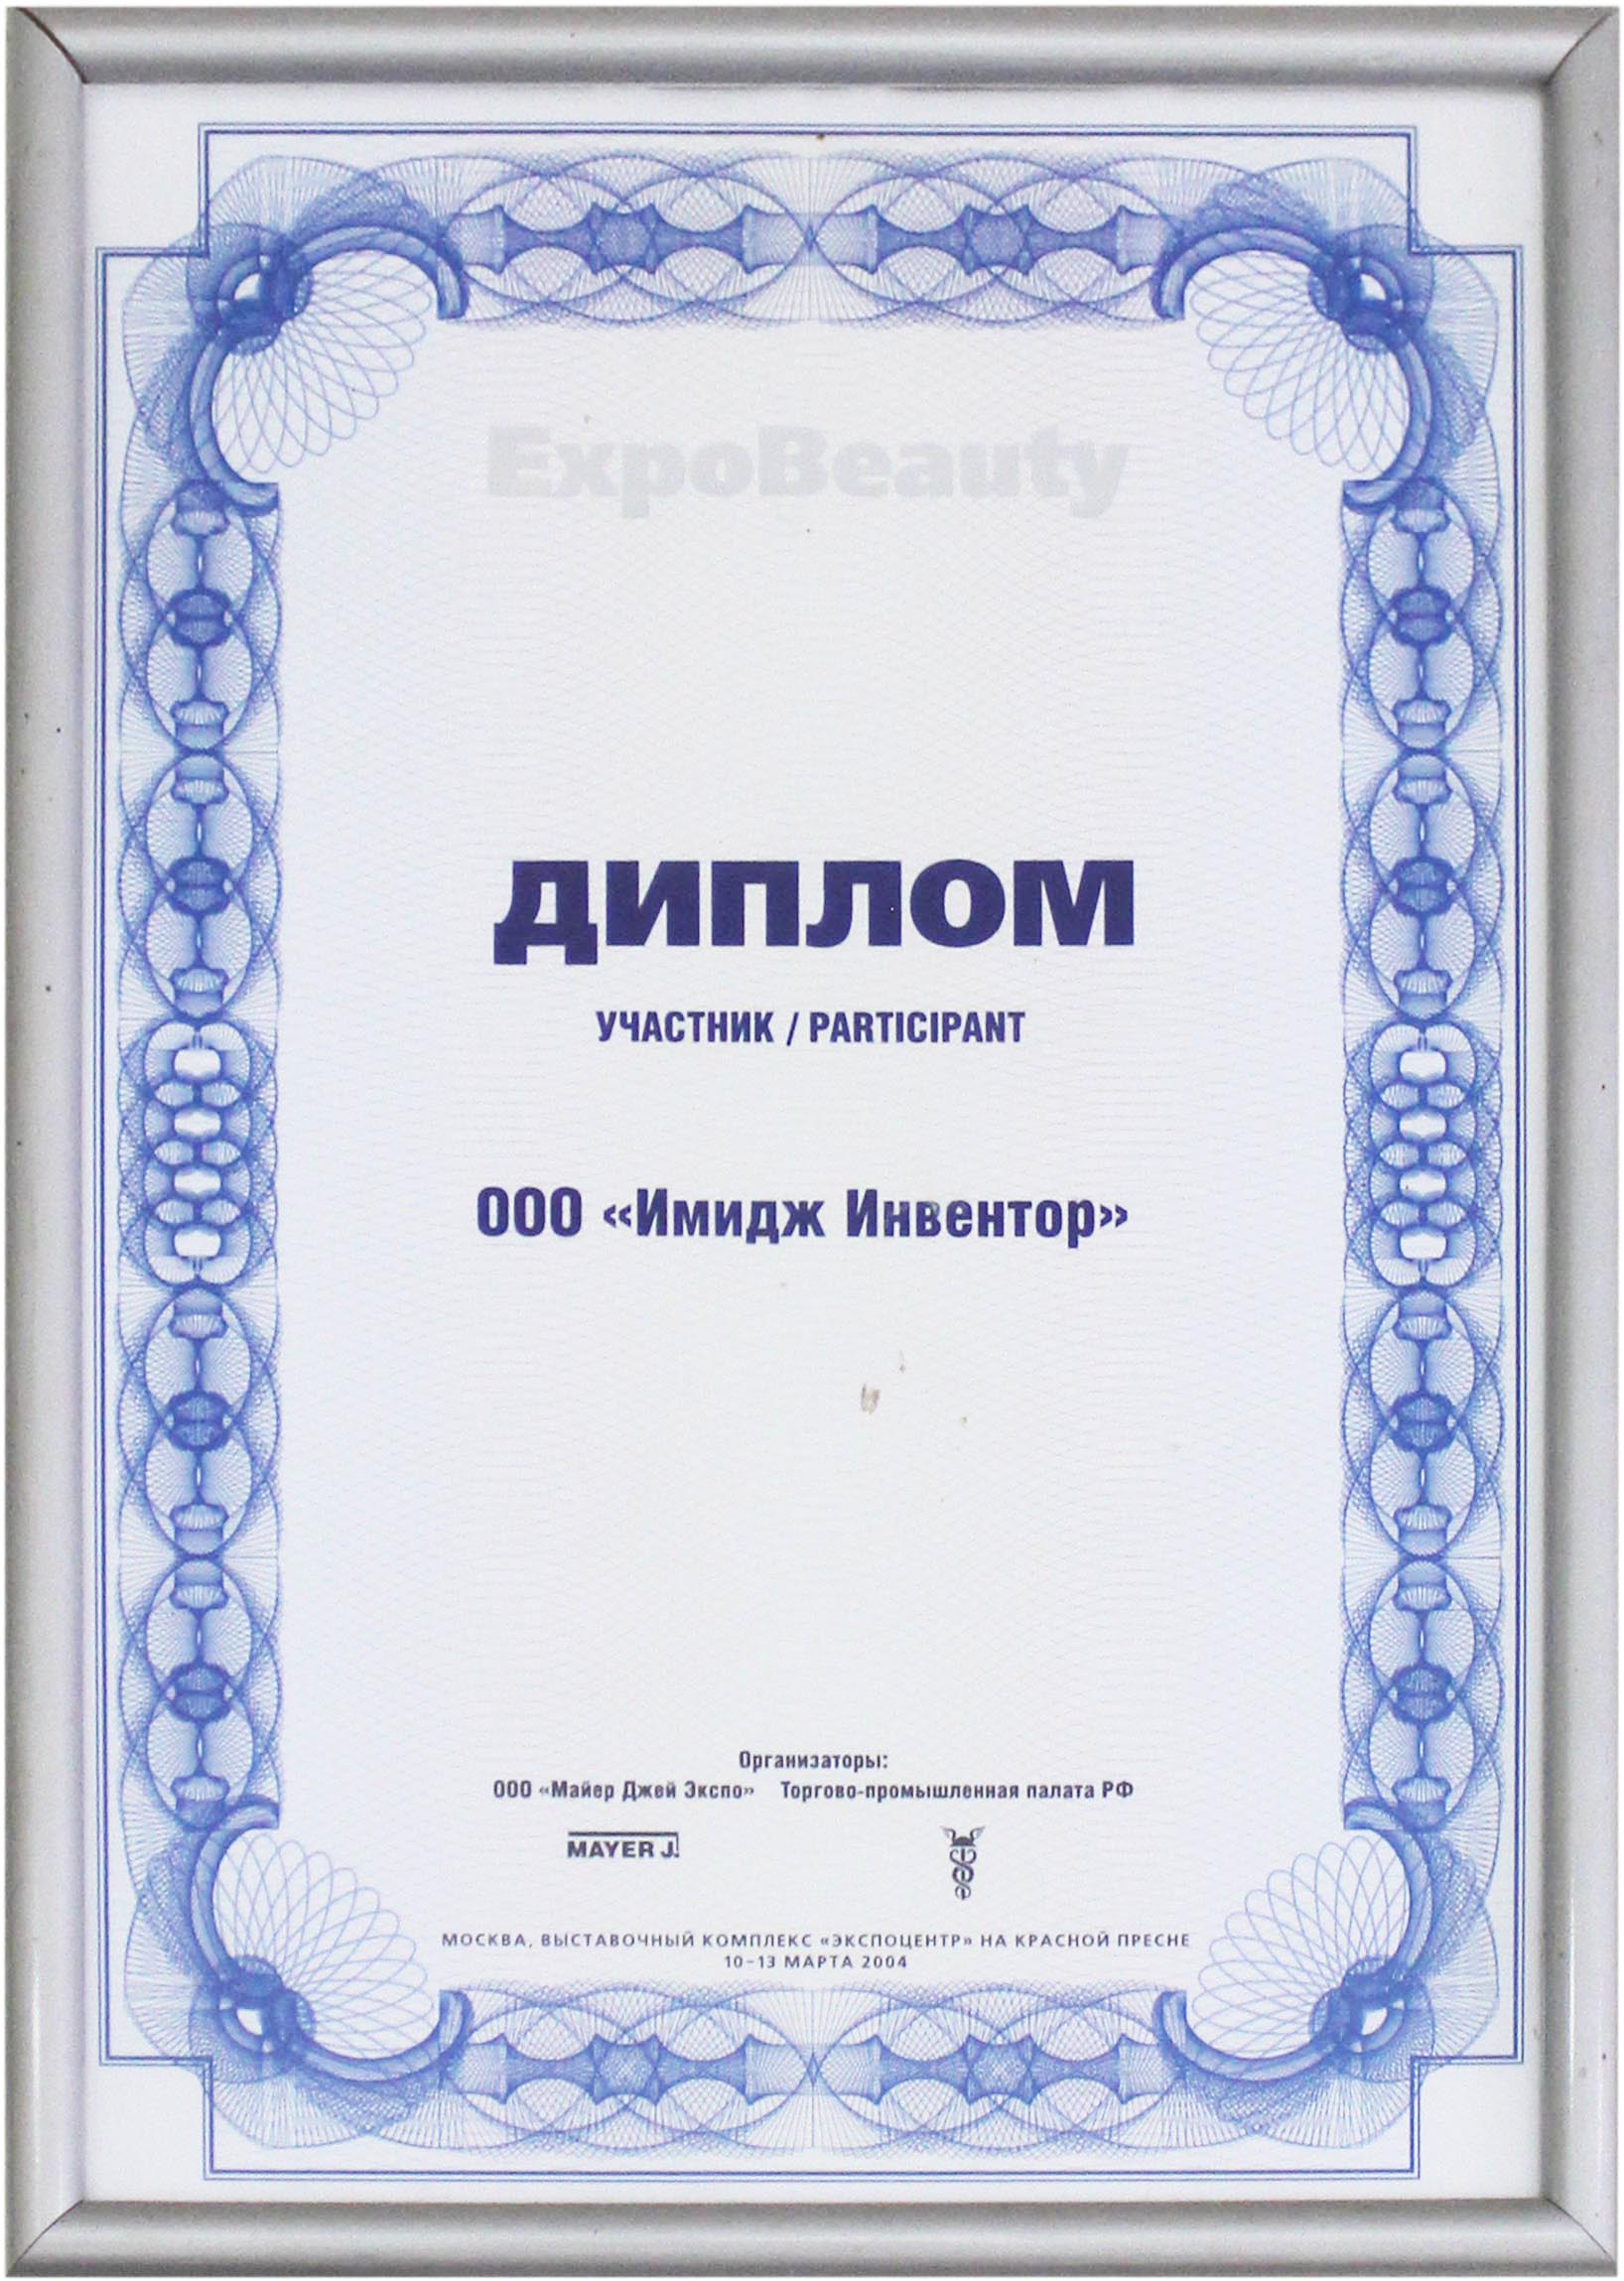 ExpoBeauty 2004